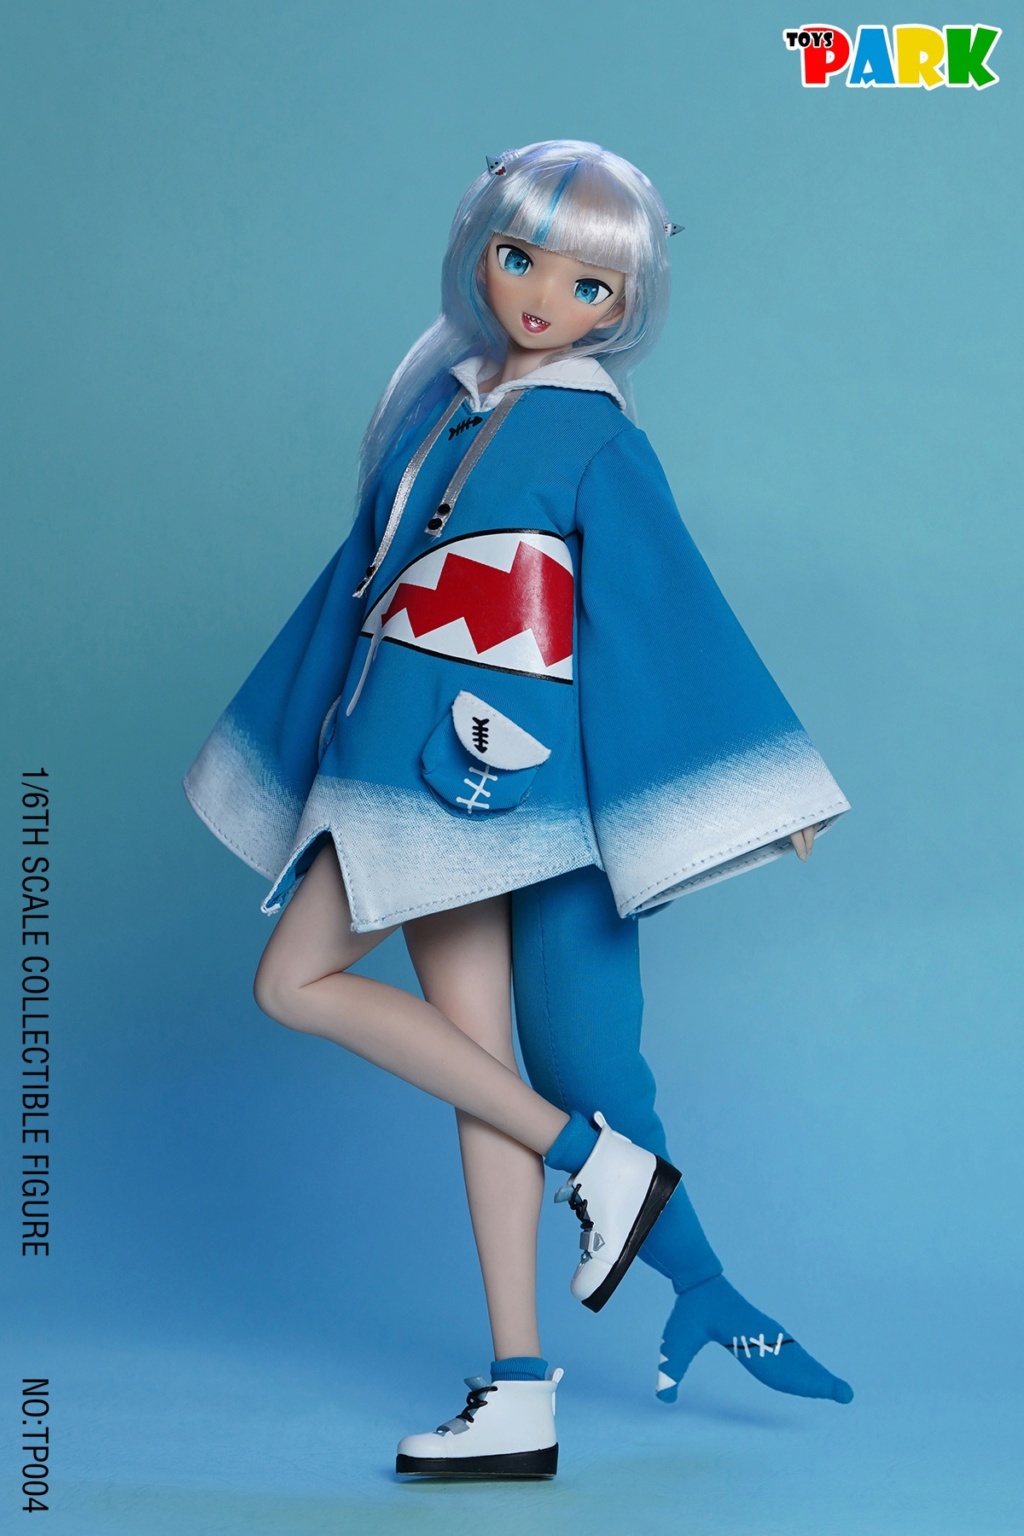 shark - NEW PRODUCT: TOYS PARK: 1/6 Shark Girl Accessories Set #TP004 7e1a9510